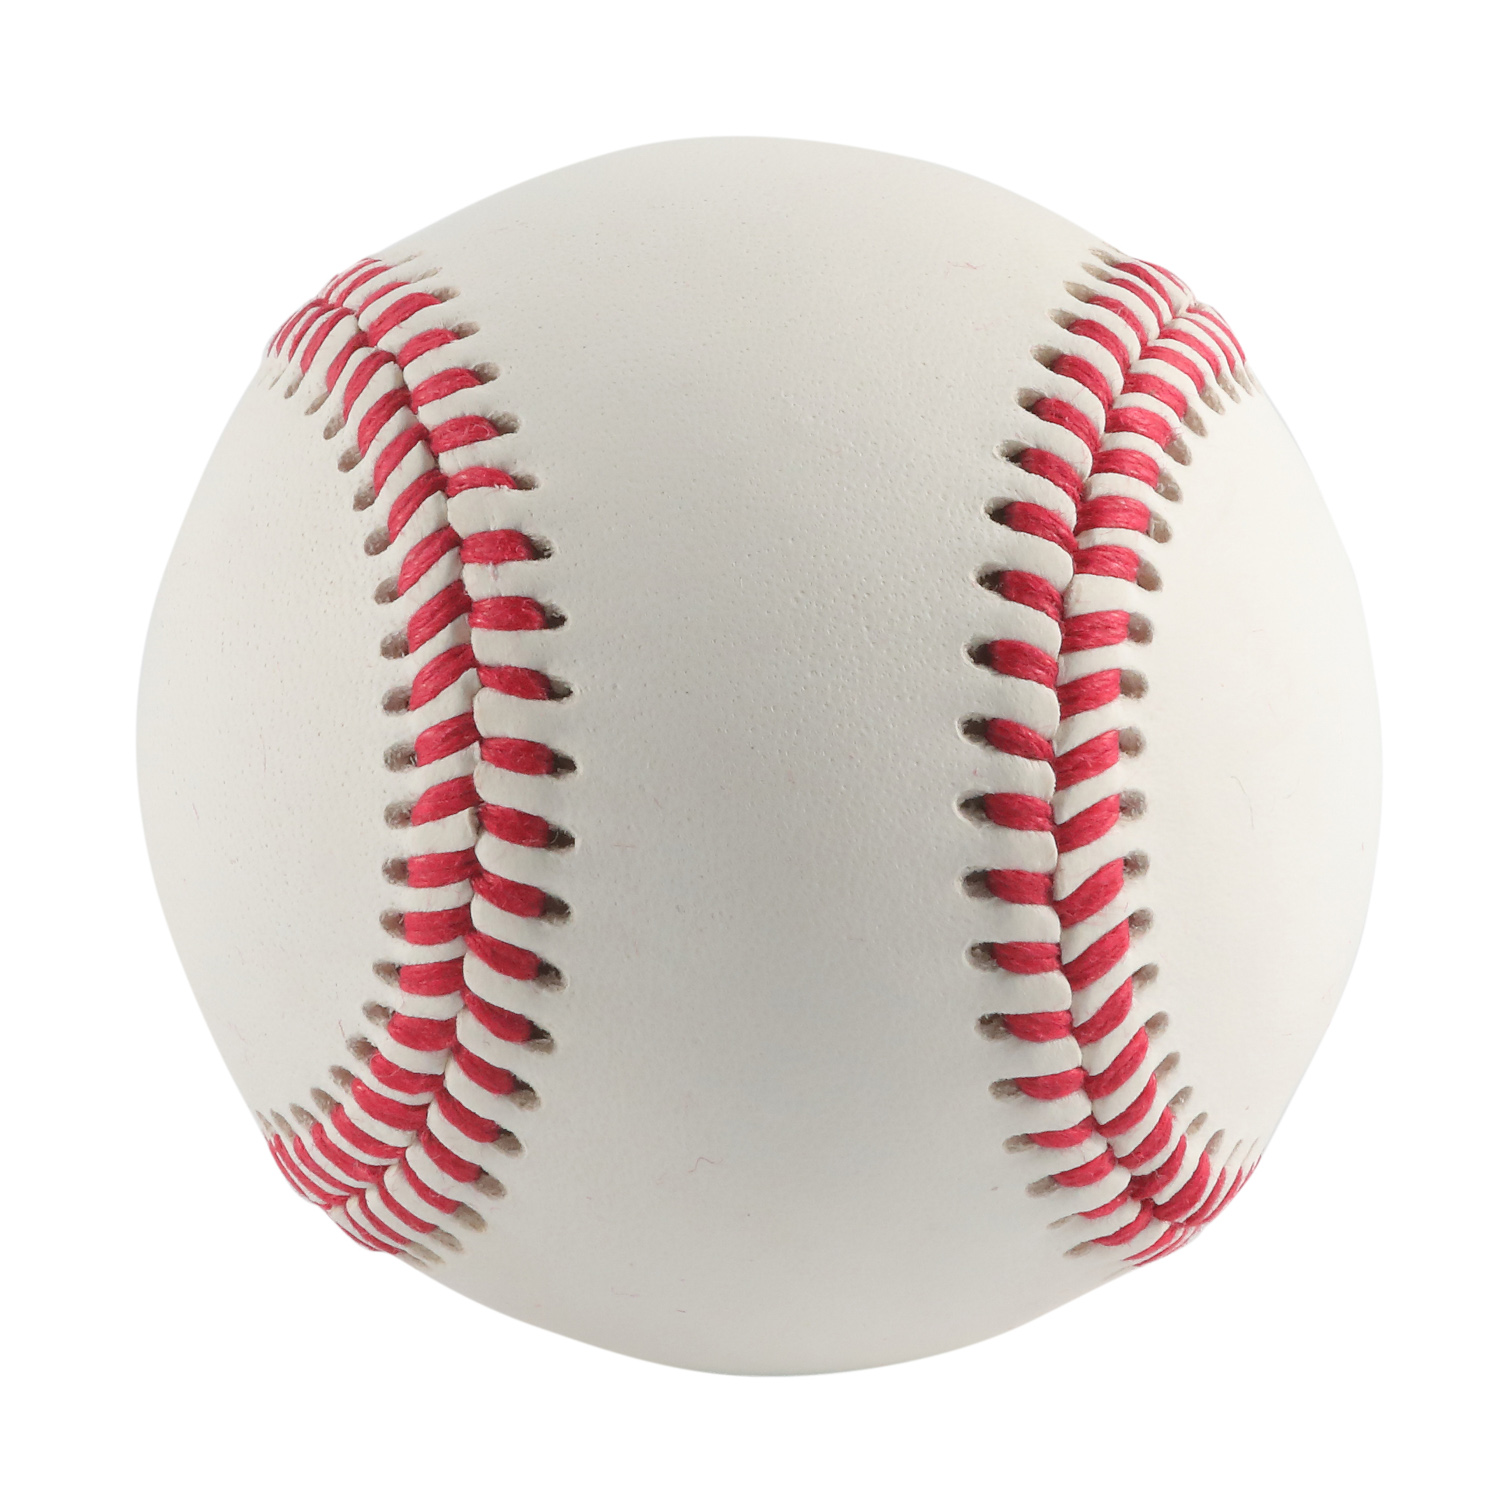 Hochwertiger, professioneller, offizieller 9-Zoll-Baseball aus Rindsleder